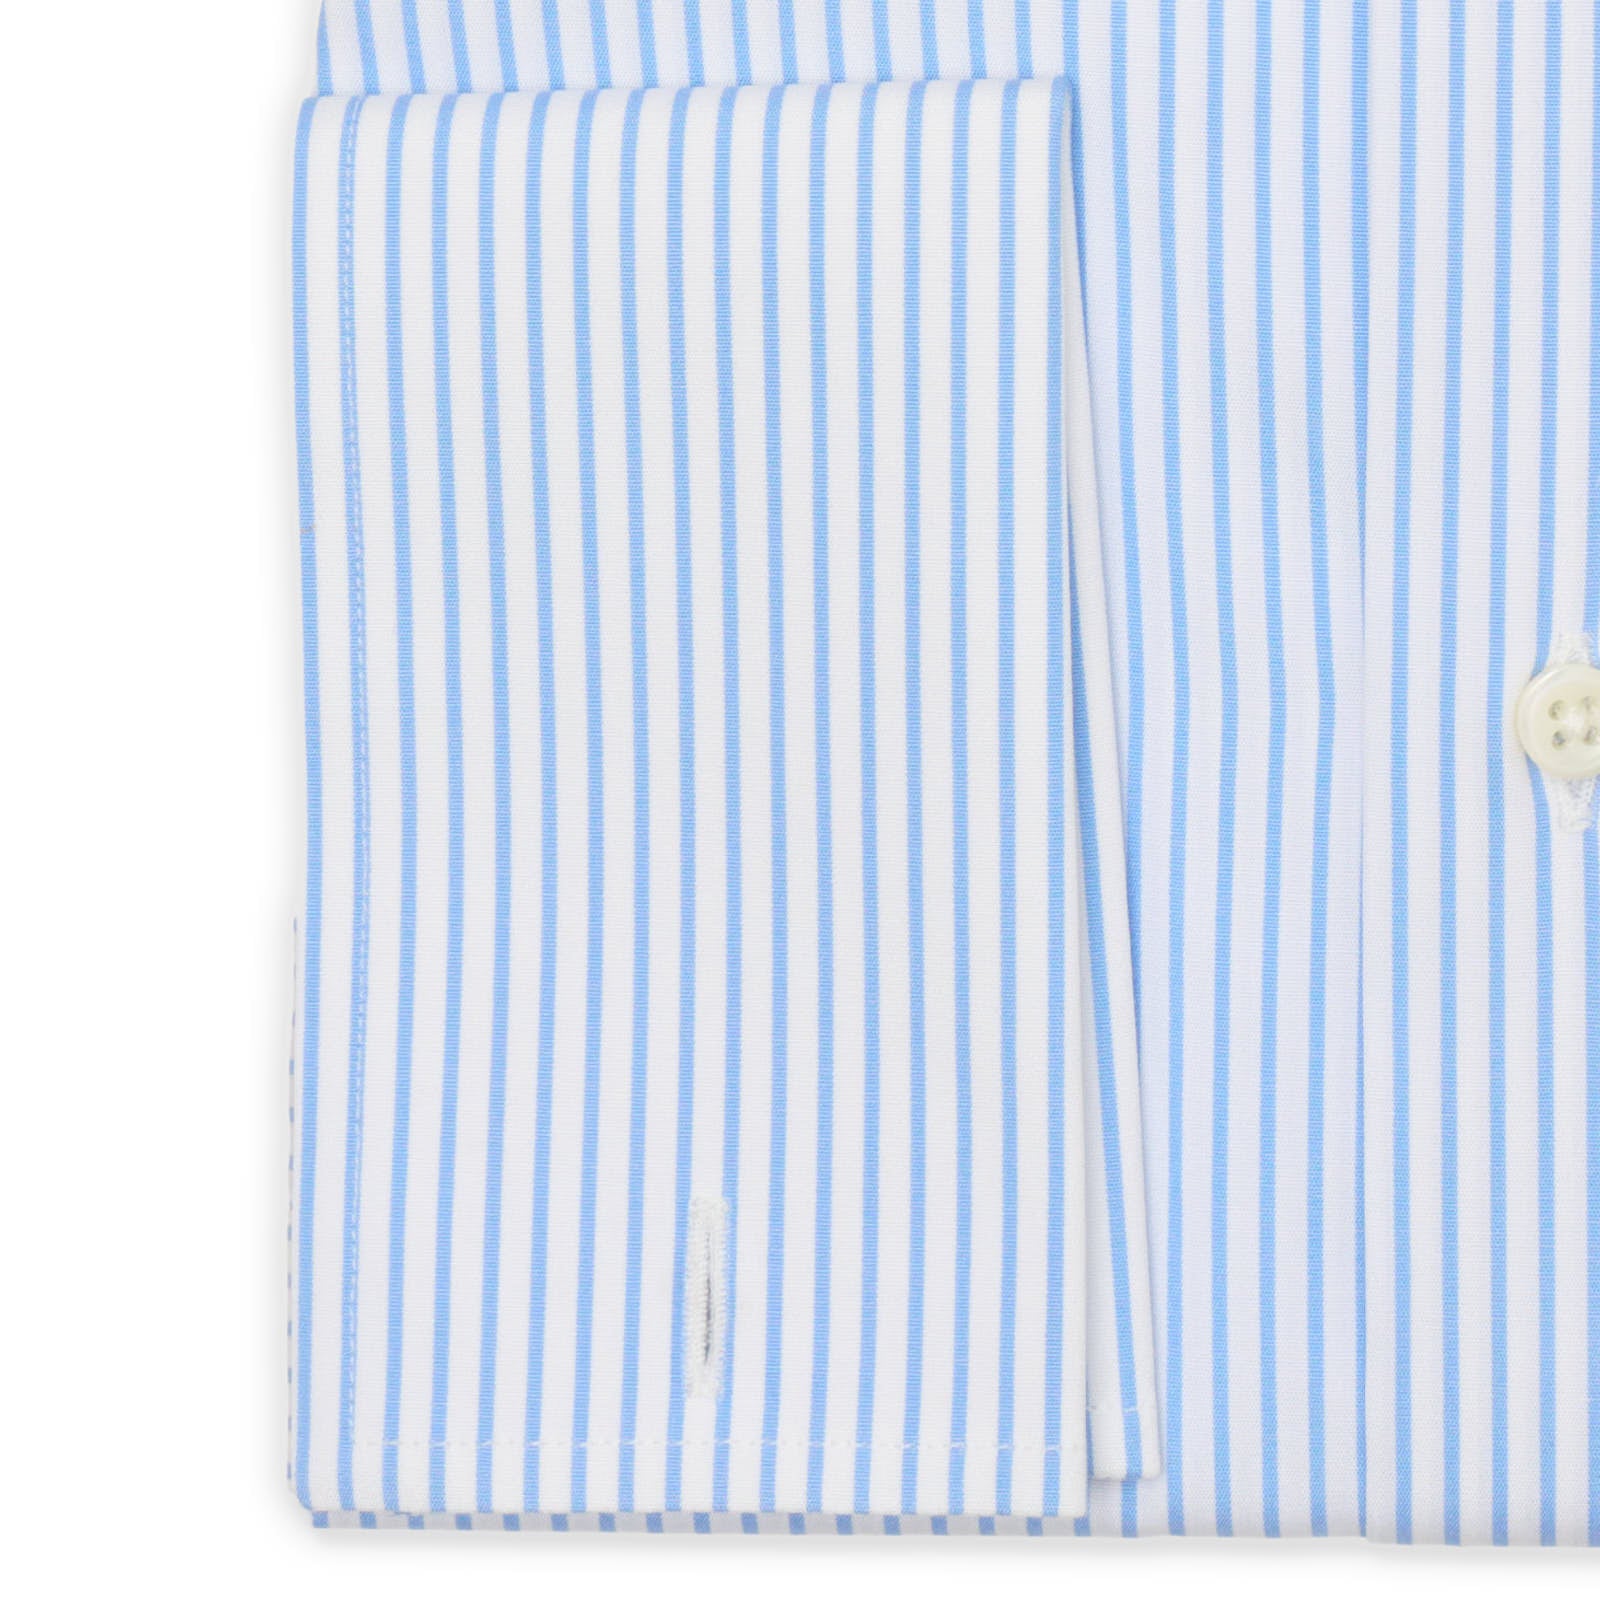 VANNUCCI Milano Blue-White Striped Cotton French Cuff Dress Shirt NEW